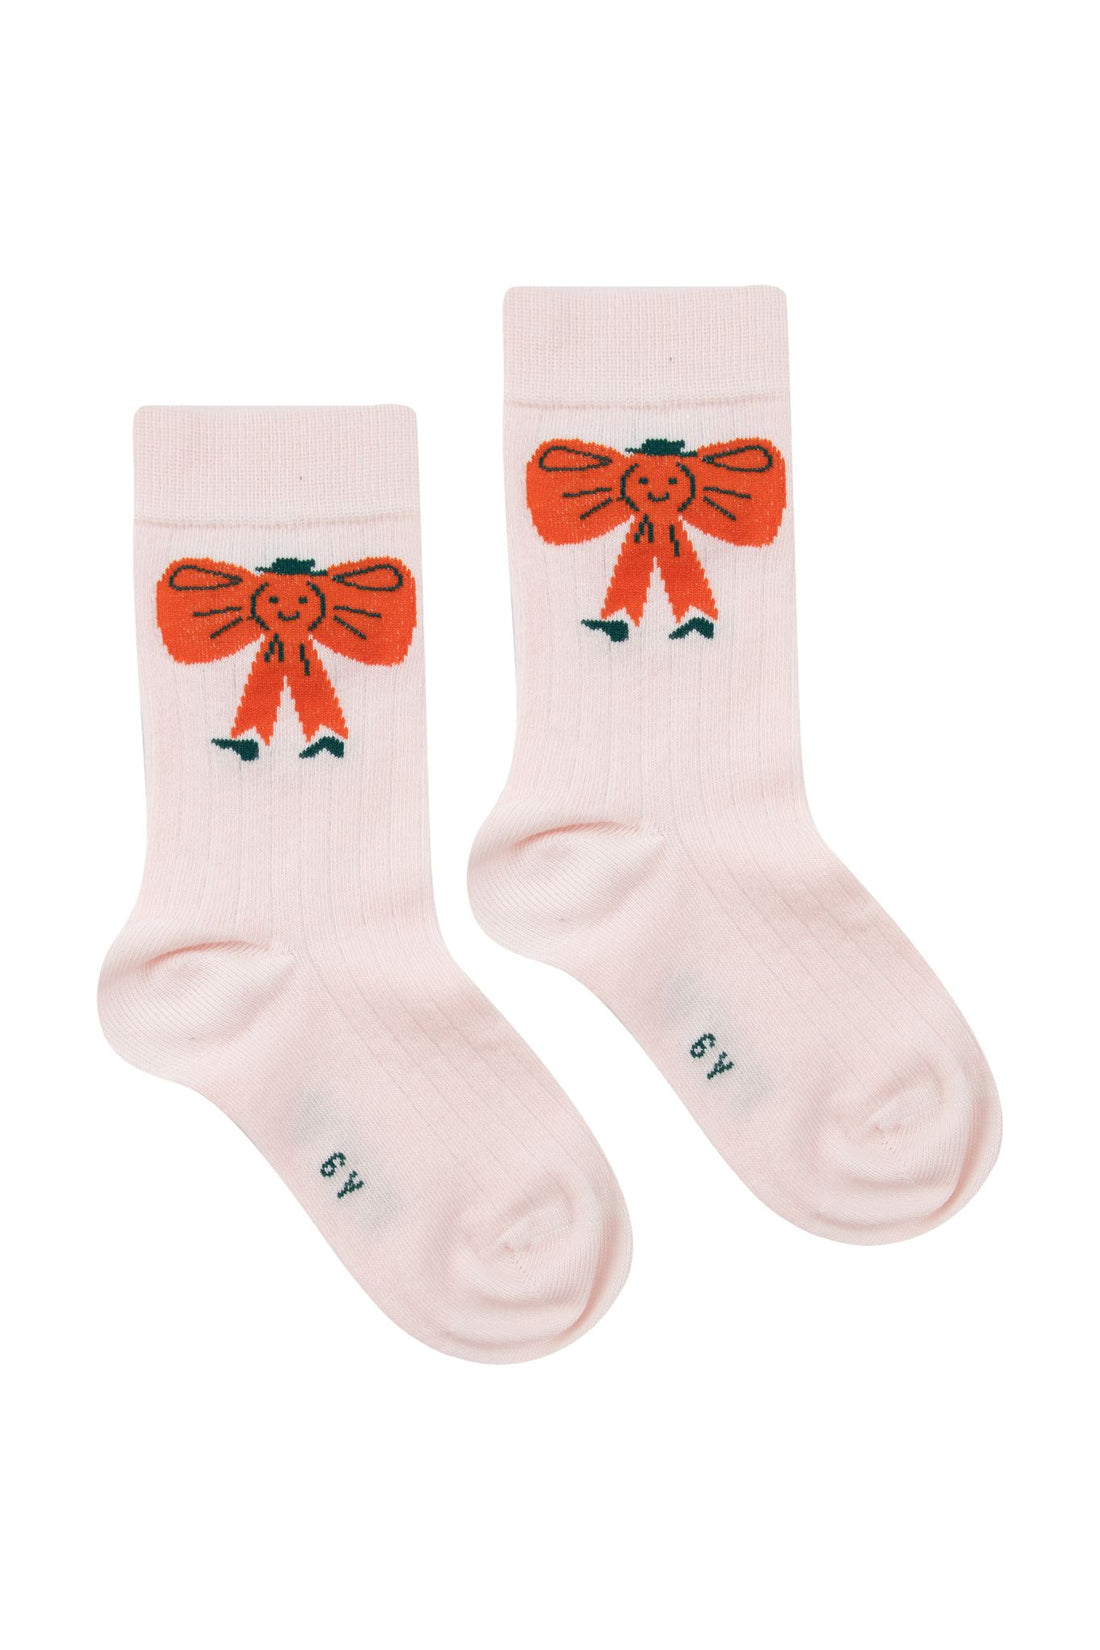 Tiny Cottons - bow socks - soft pink